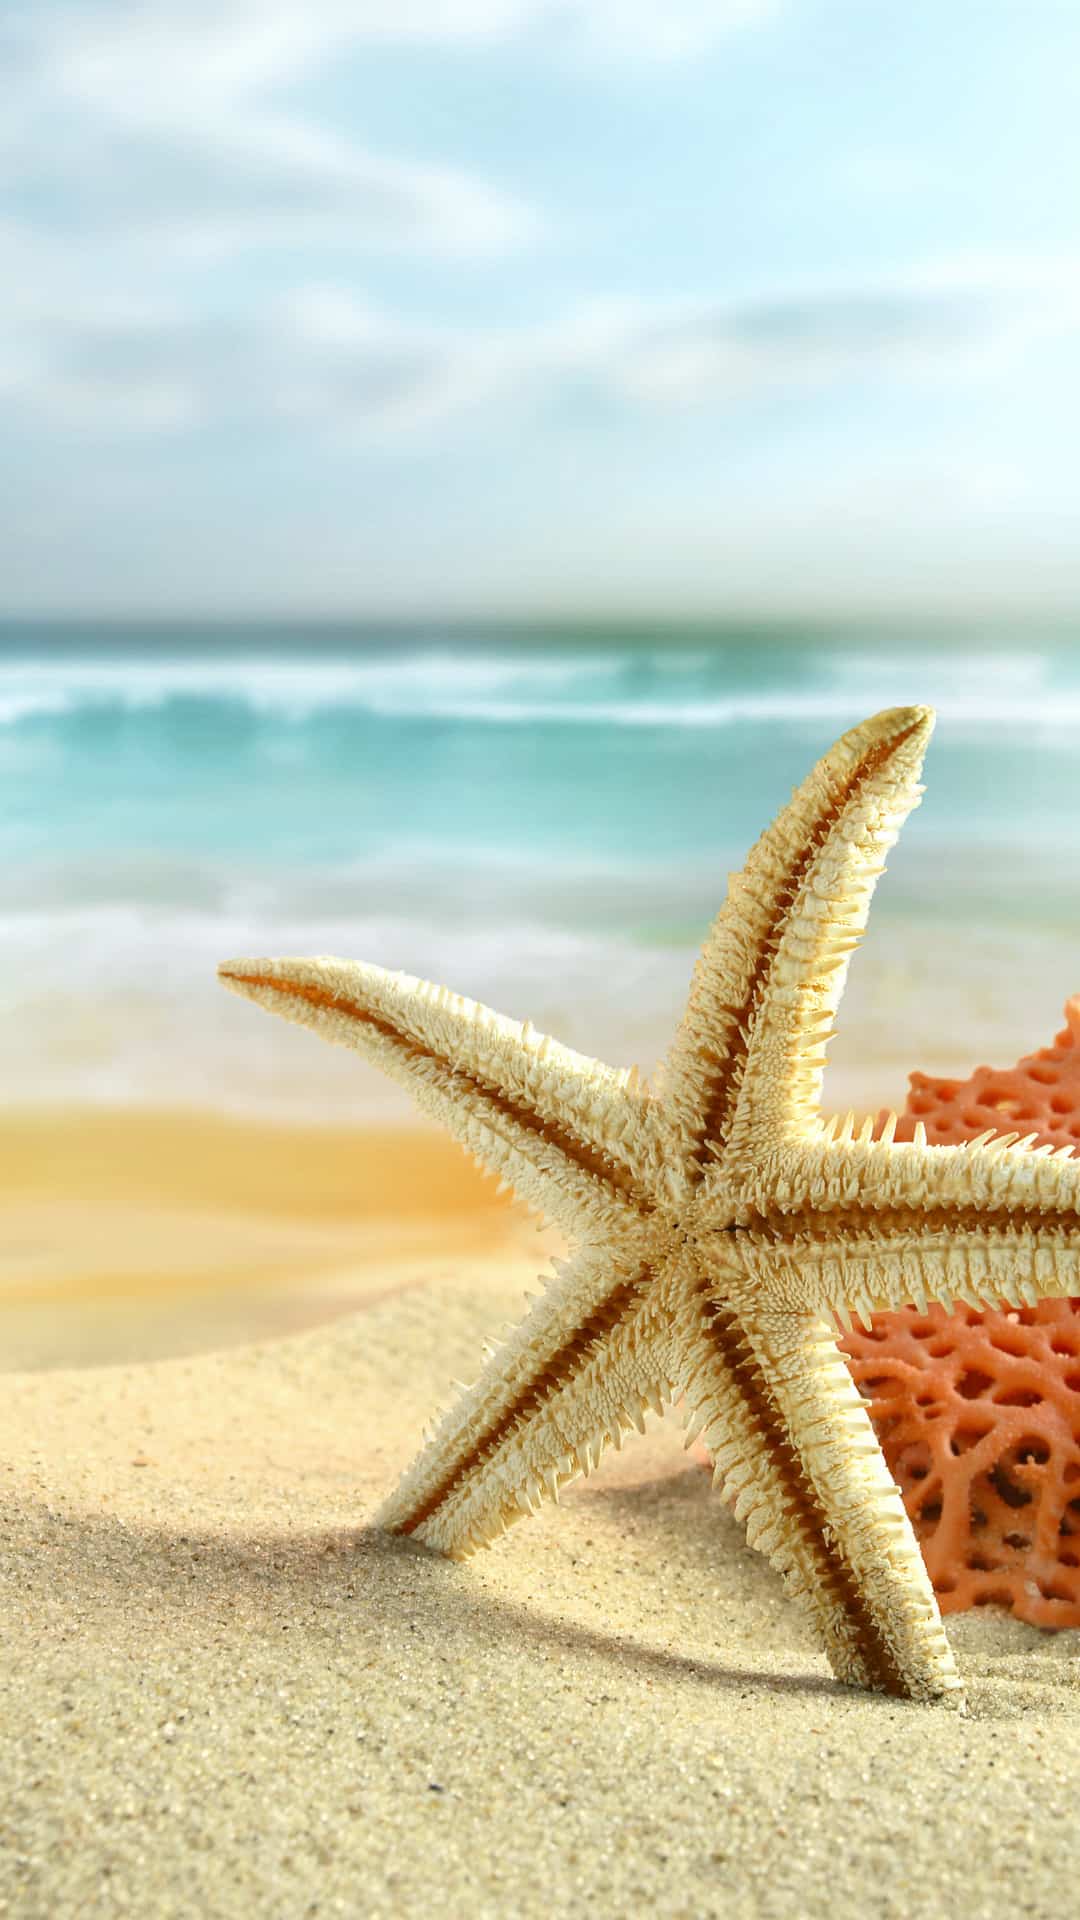 sea-star-summer-beach-android-wallpaper